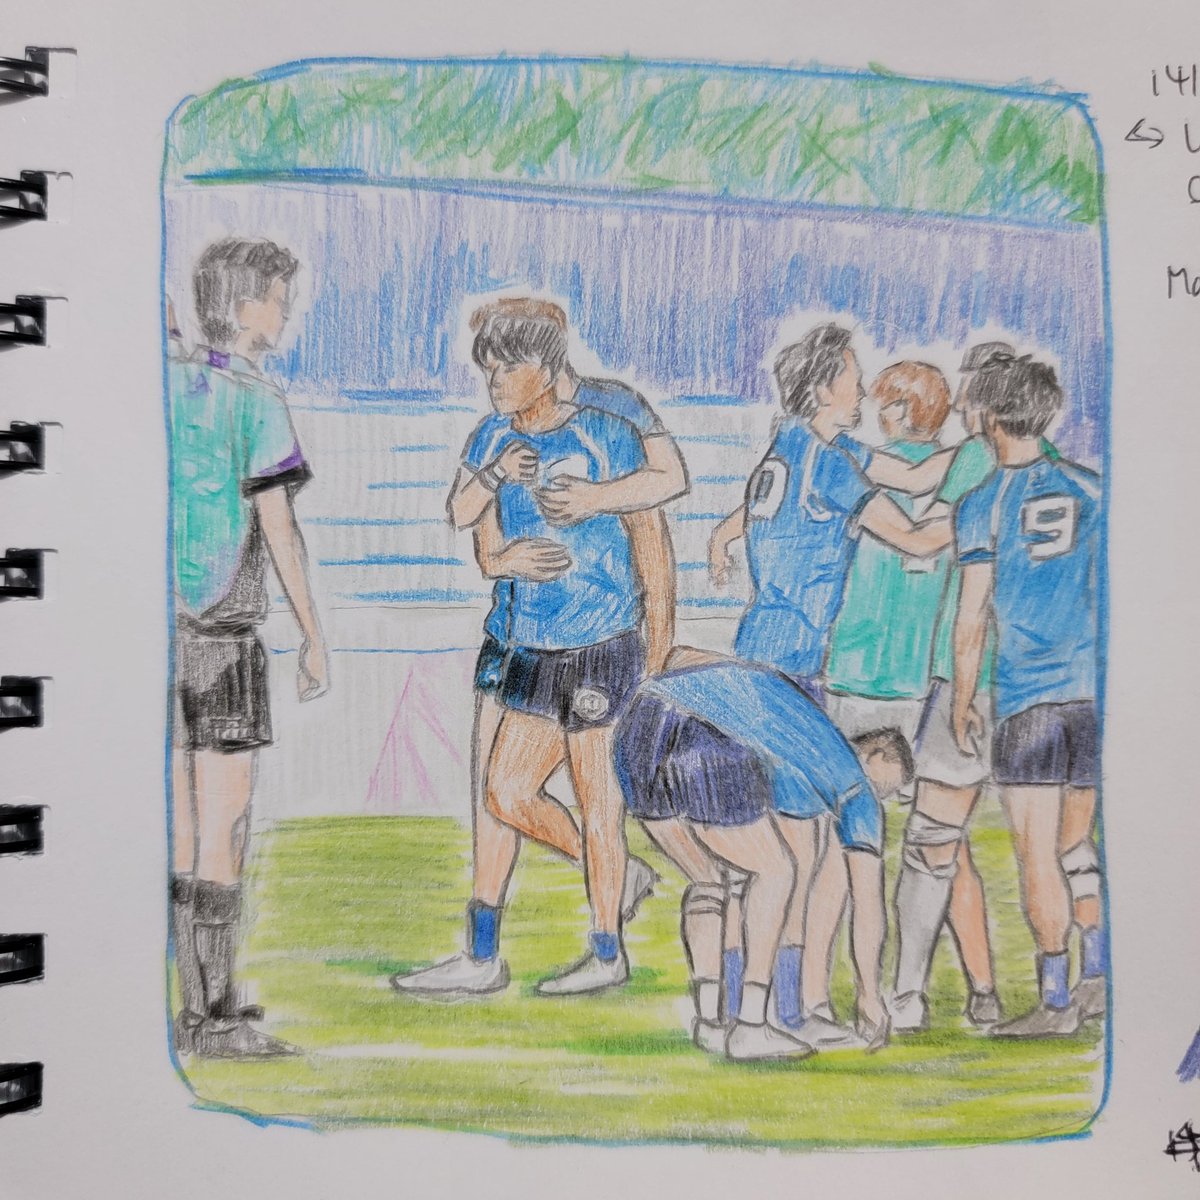 Angry Leo😂
#rugby #rugbyart #sketch #art #colourpencil #artwork #hkrugby #sketchbookartwork